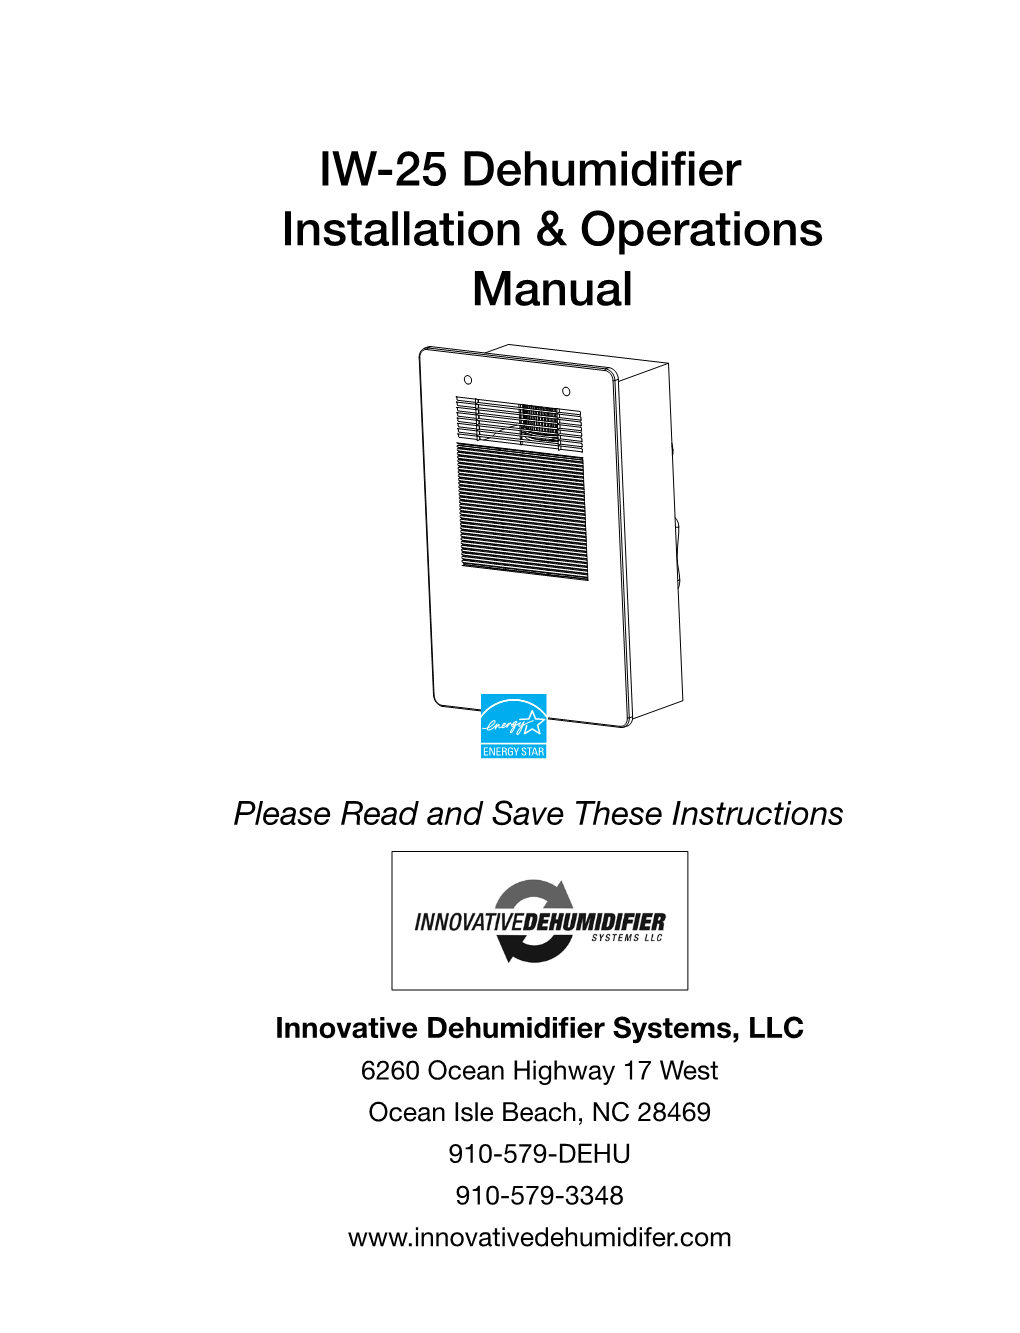 IW-25 Dehumidifier Installation & Operations Manual